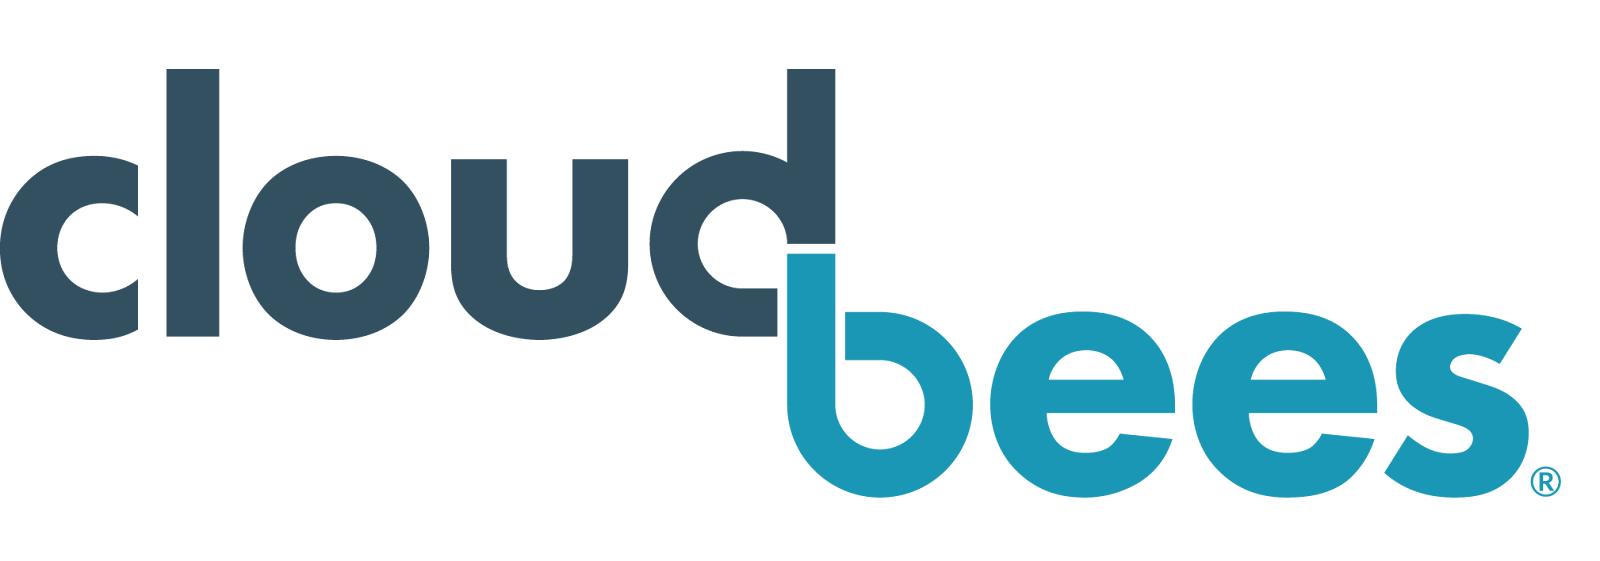 CloudBees-Logo.png